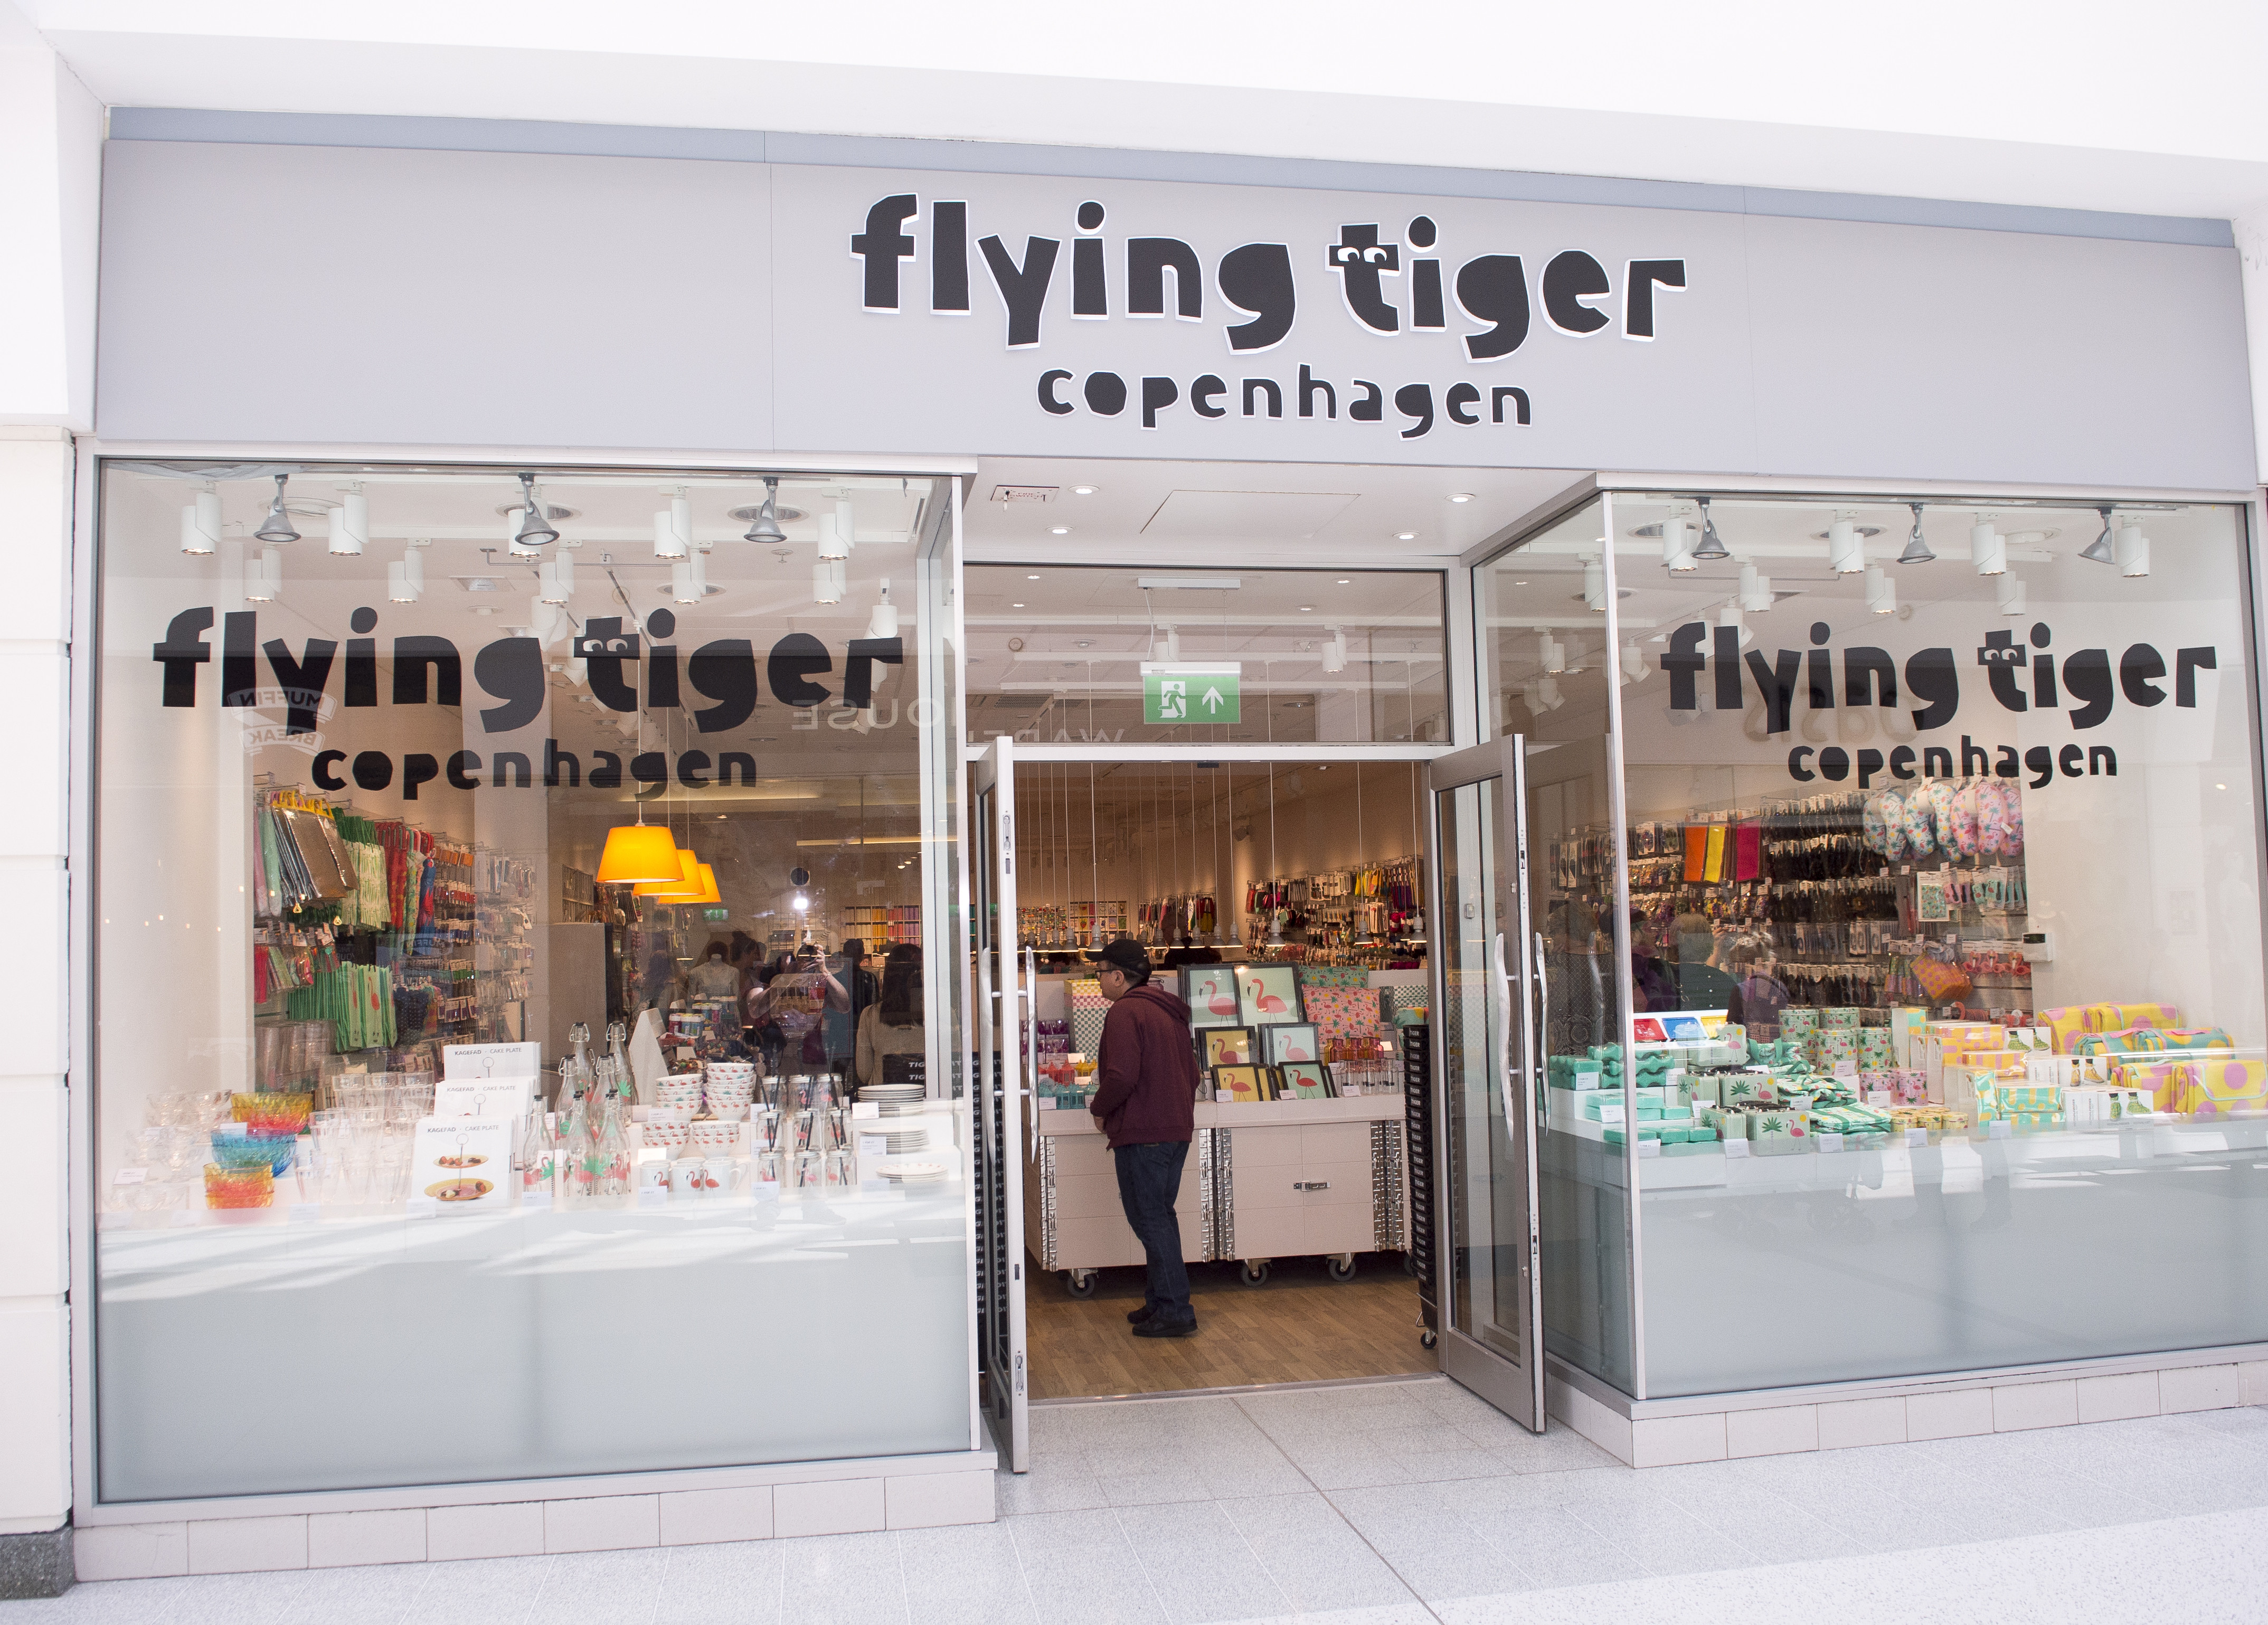 Flying_tiger